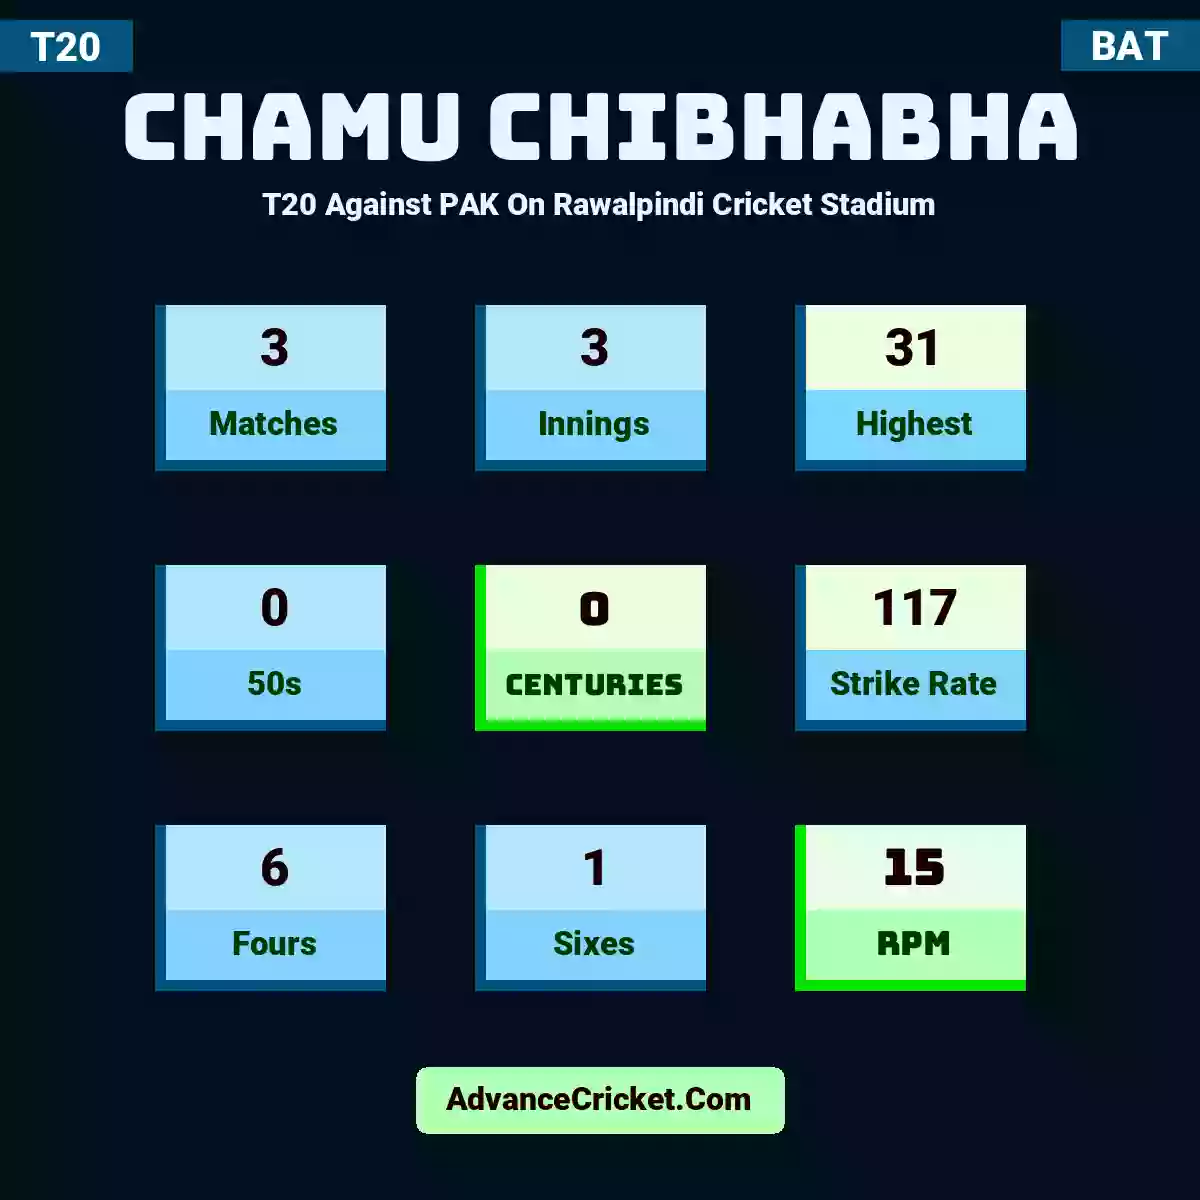 Chamu Chibhabha T20  Against PAK On Rawalpindi Cricket Stadium, Chamu Chibhabha played 3 matches, scored 31 runs as highest, 0 half-centuries, and 0 centuries, with a strike rate of 117. C.Chibhabha hit 6 fours and 1 sixes, with an RPM of 15.